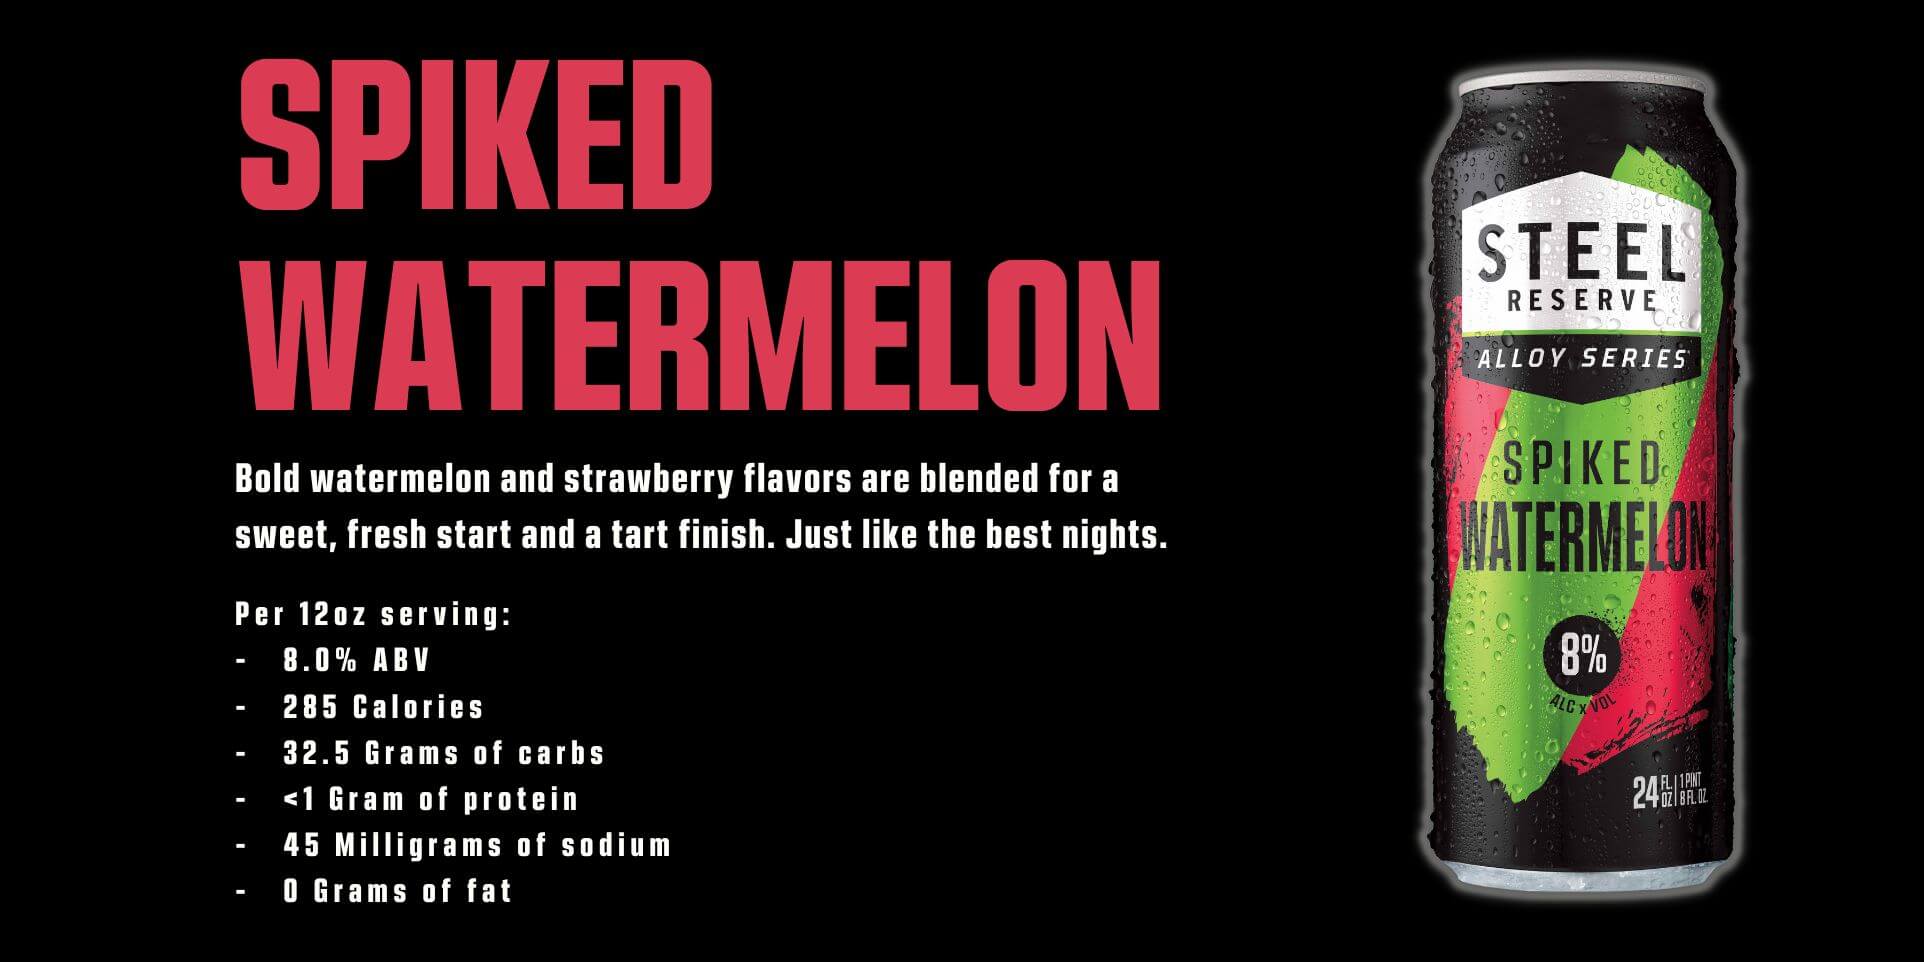 Spiked Watermelon description